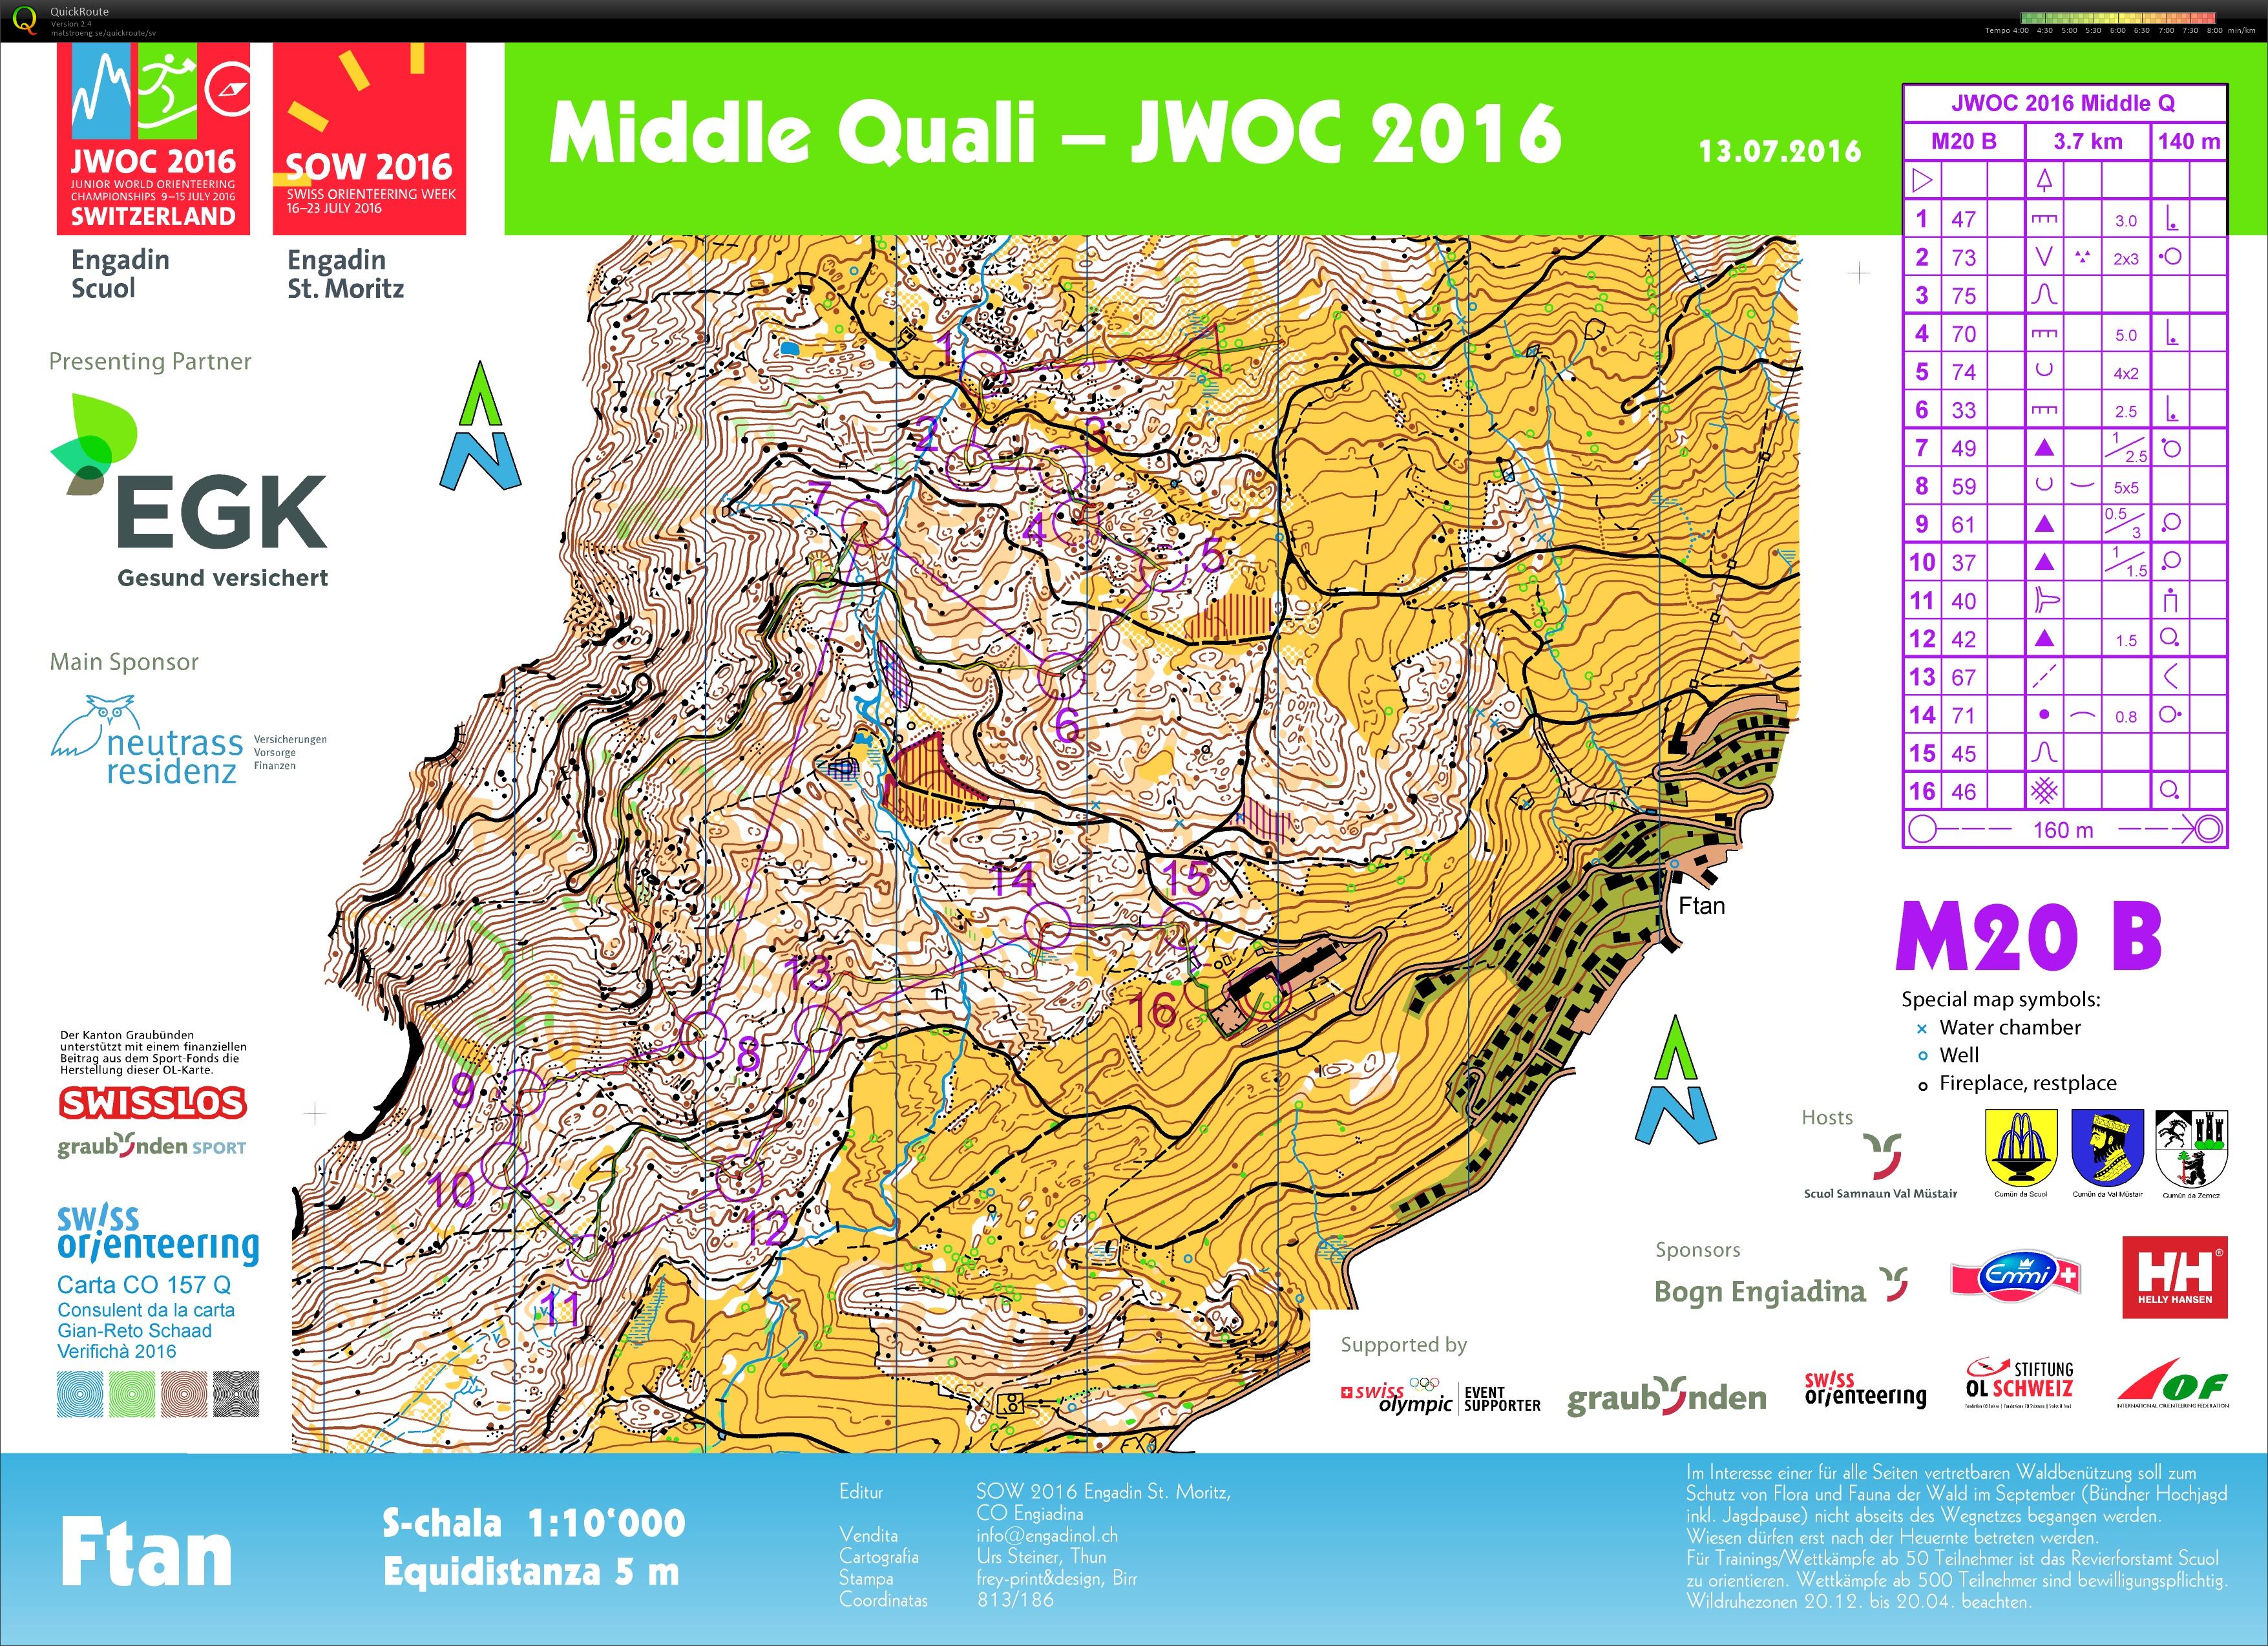 JWOC Middle Qualification heat B (2016-07-13)